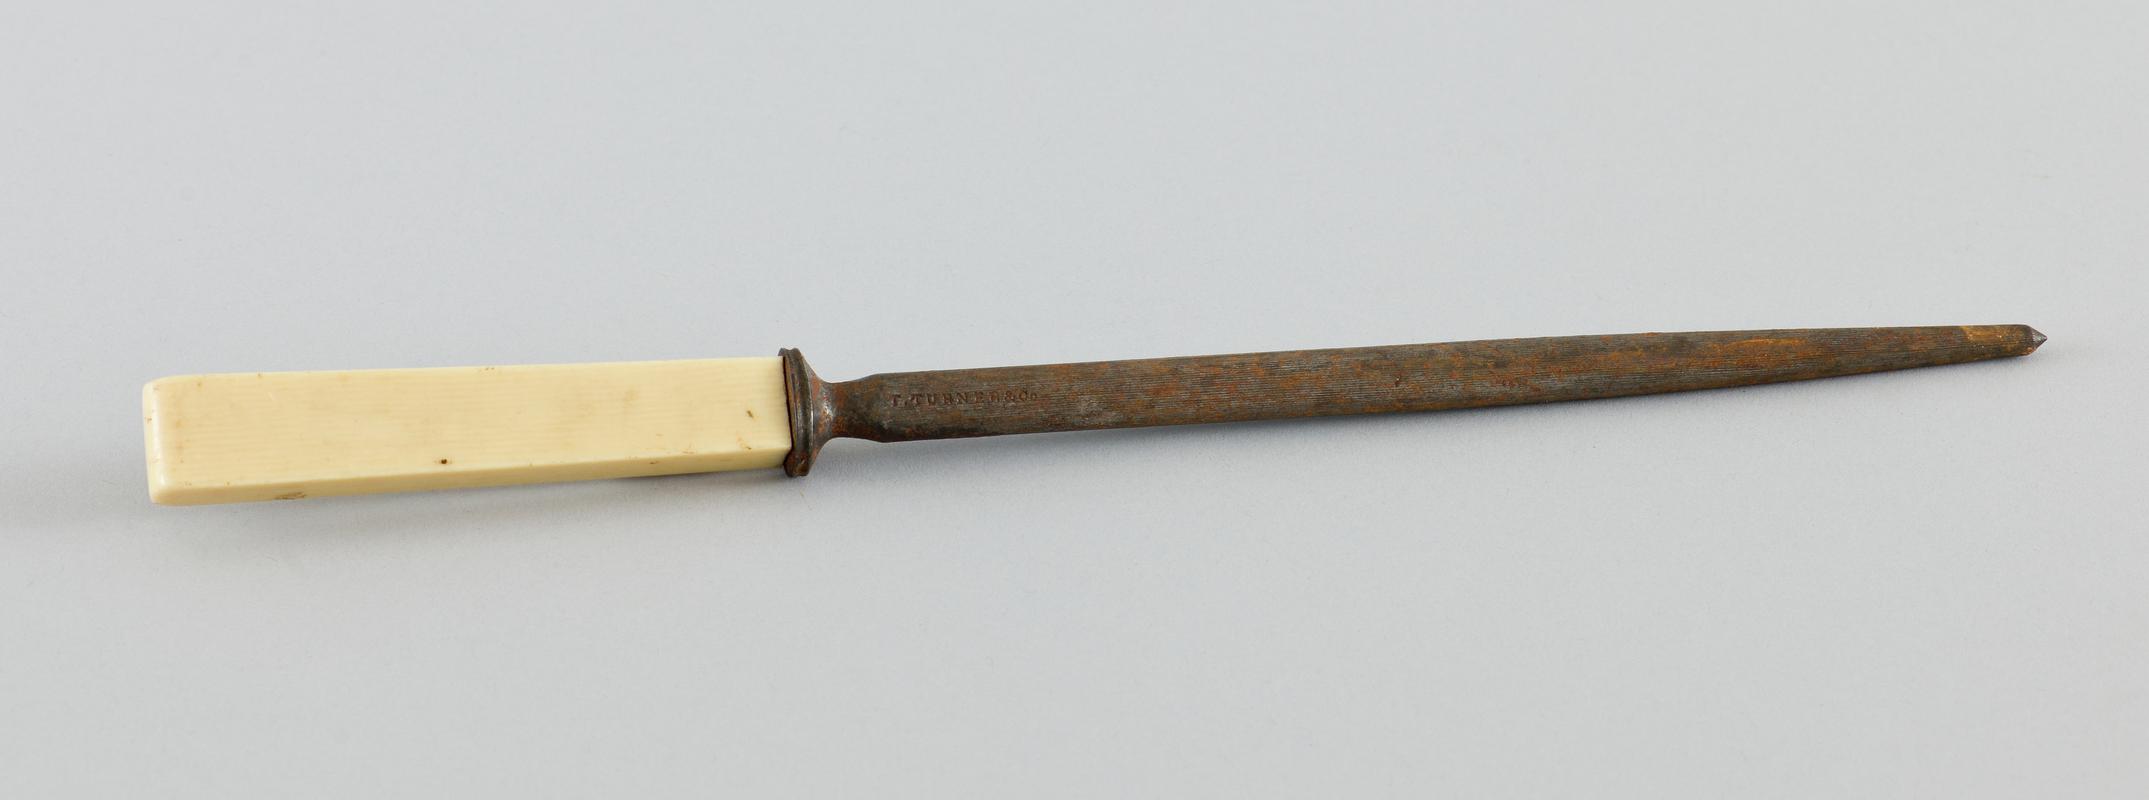 Knife steel/sharpener (rusting) with imitiation bone handle.